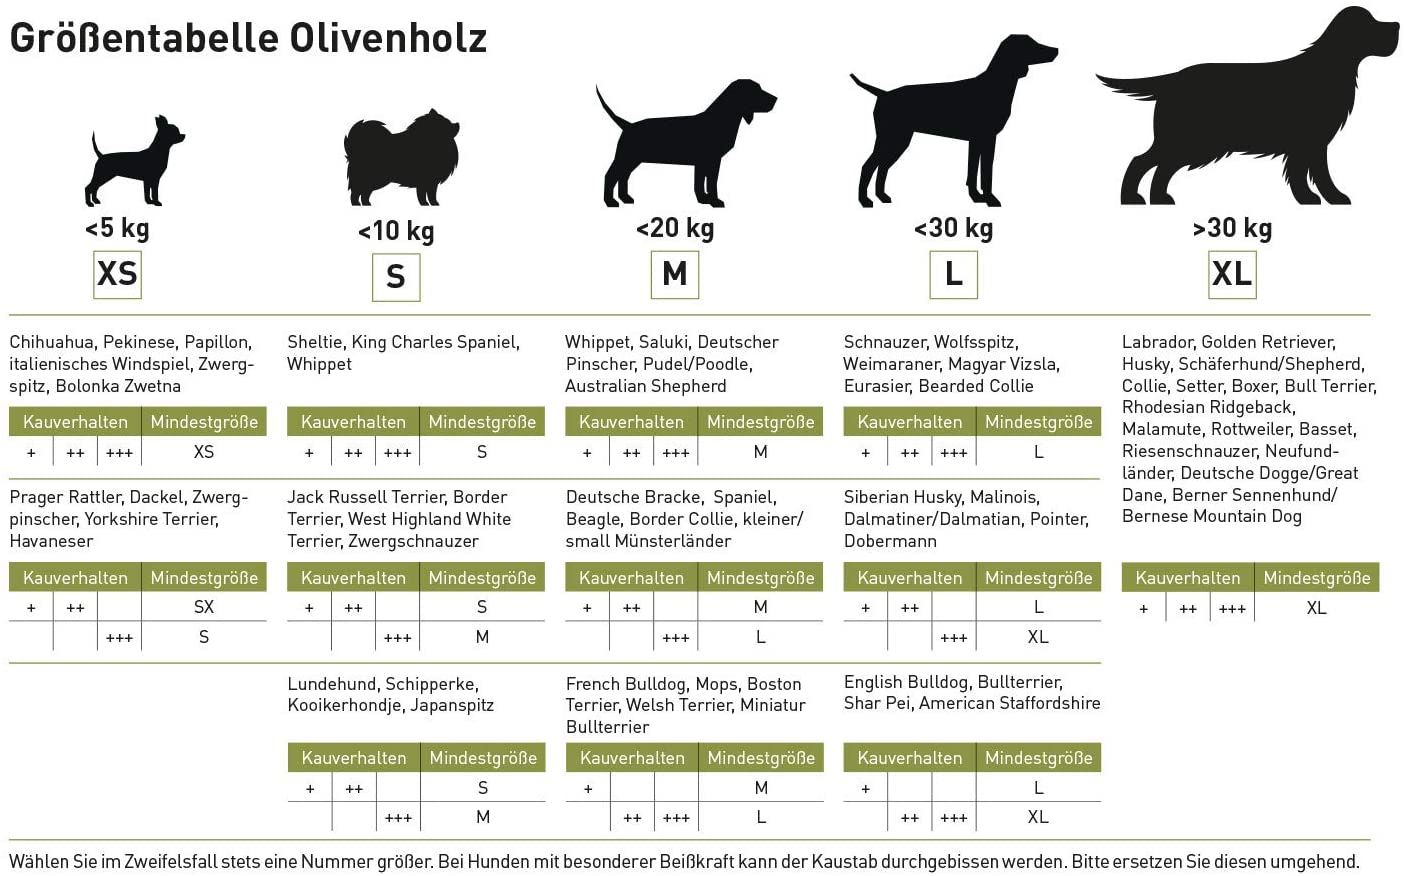  Chewies 019748 Juguete para Perros, de Madera de Olivo, 100% Natural, para Perros, hasta 5 kg, tamaño XS 